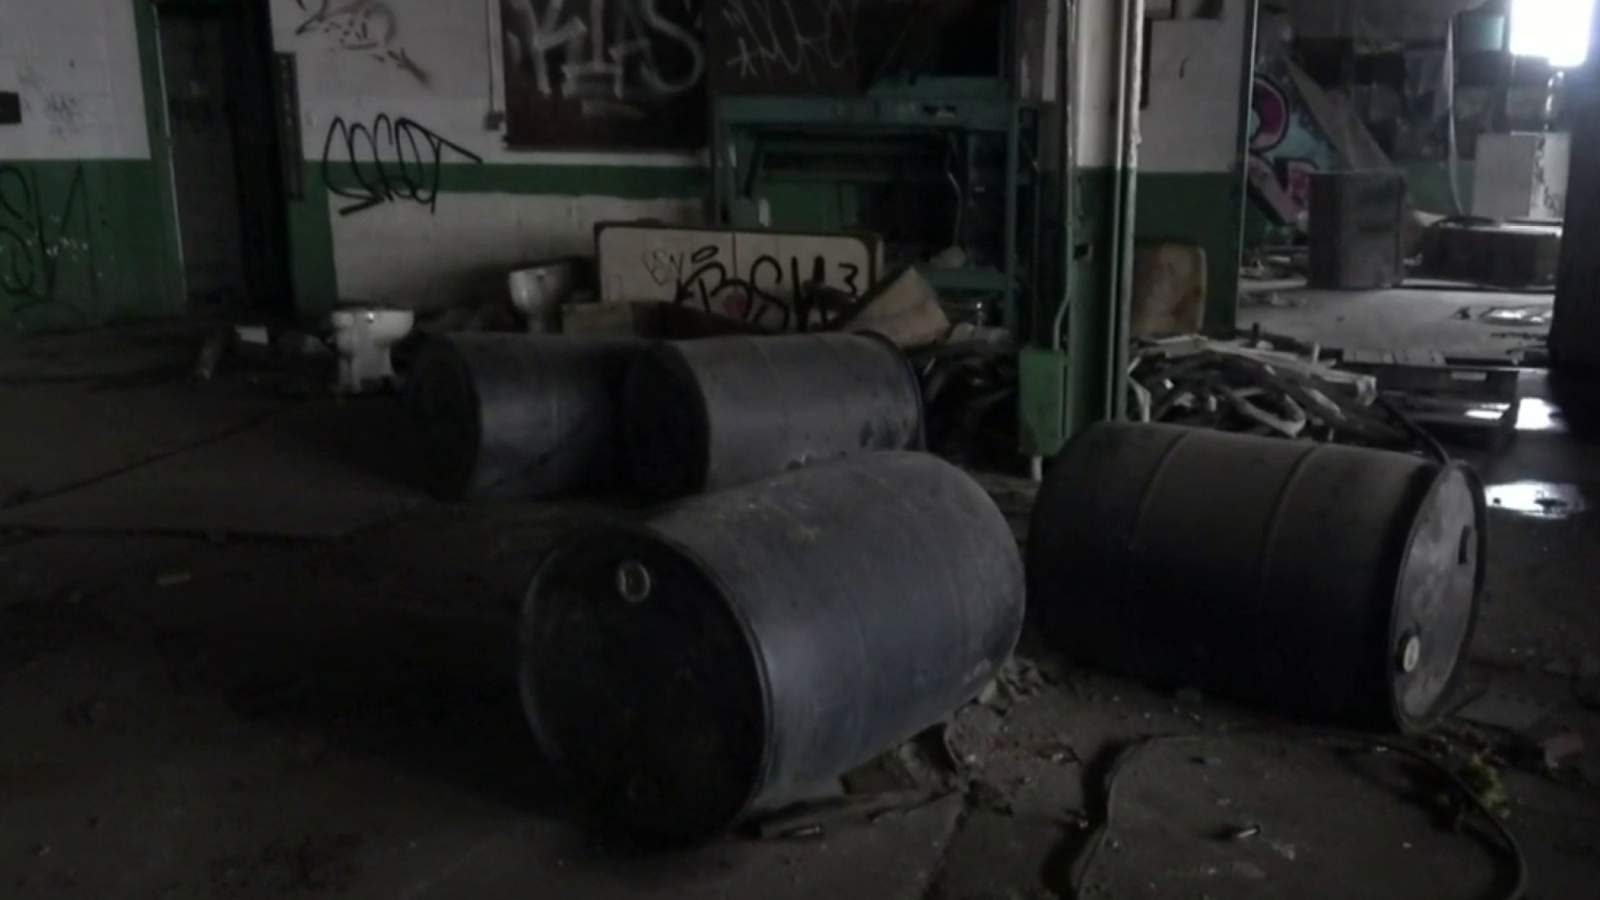 Crews test samples of potentially hazardous liquid found in abandoned Detroit building